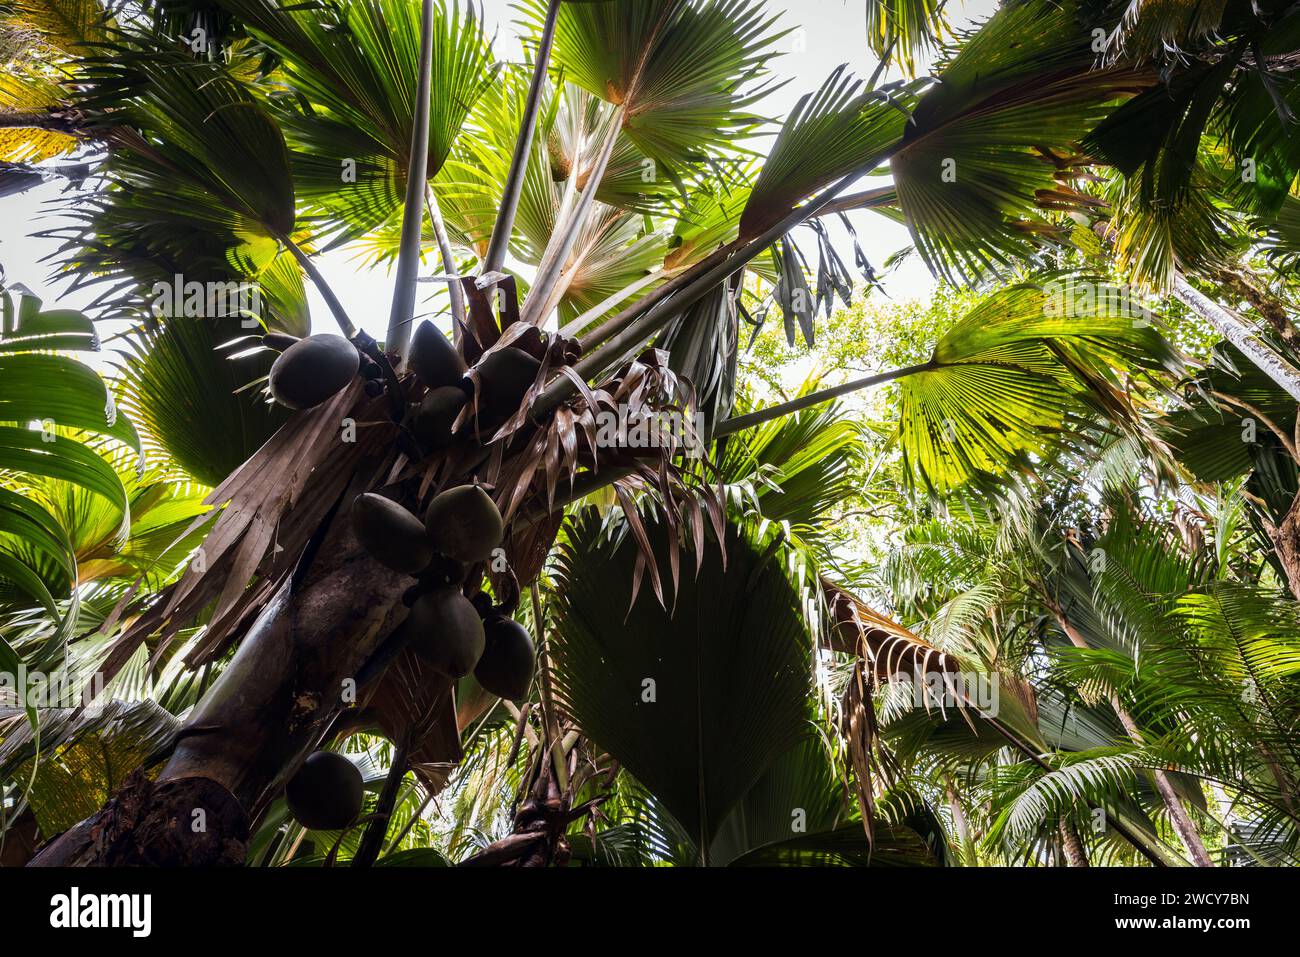 Coco de mer fruits, Lodoicea palm tree. Vallee de Mai, Praslin island, Seychelles Stock Photo